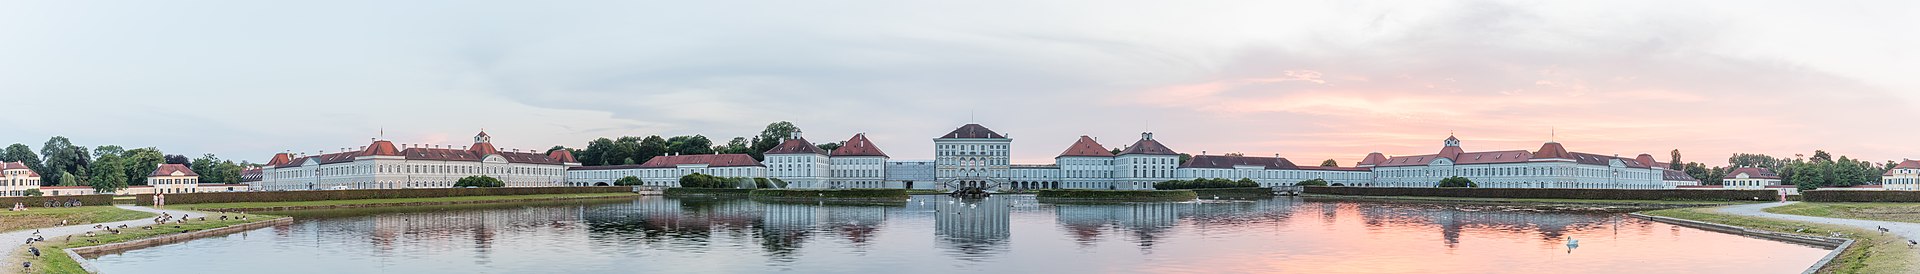 Palacio de Nymphenburg, Múnich, Alemania, 2015-07-03, DD 01-18 HDR PAN.JPG